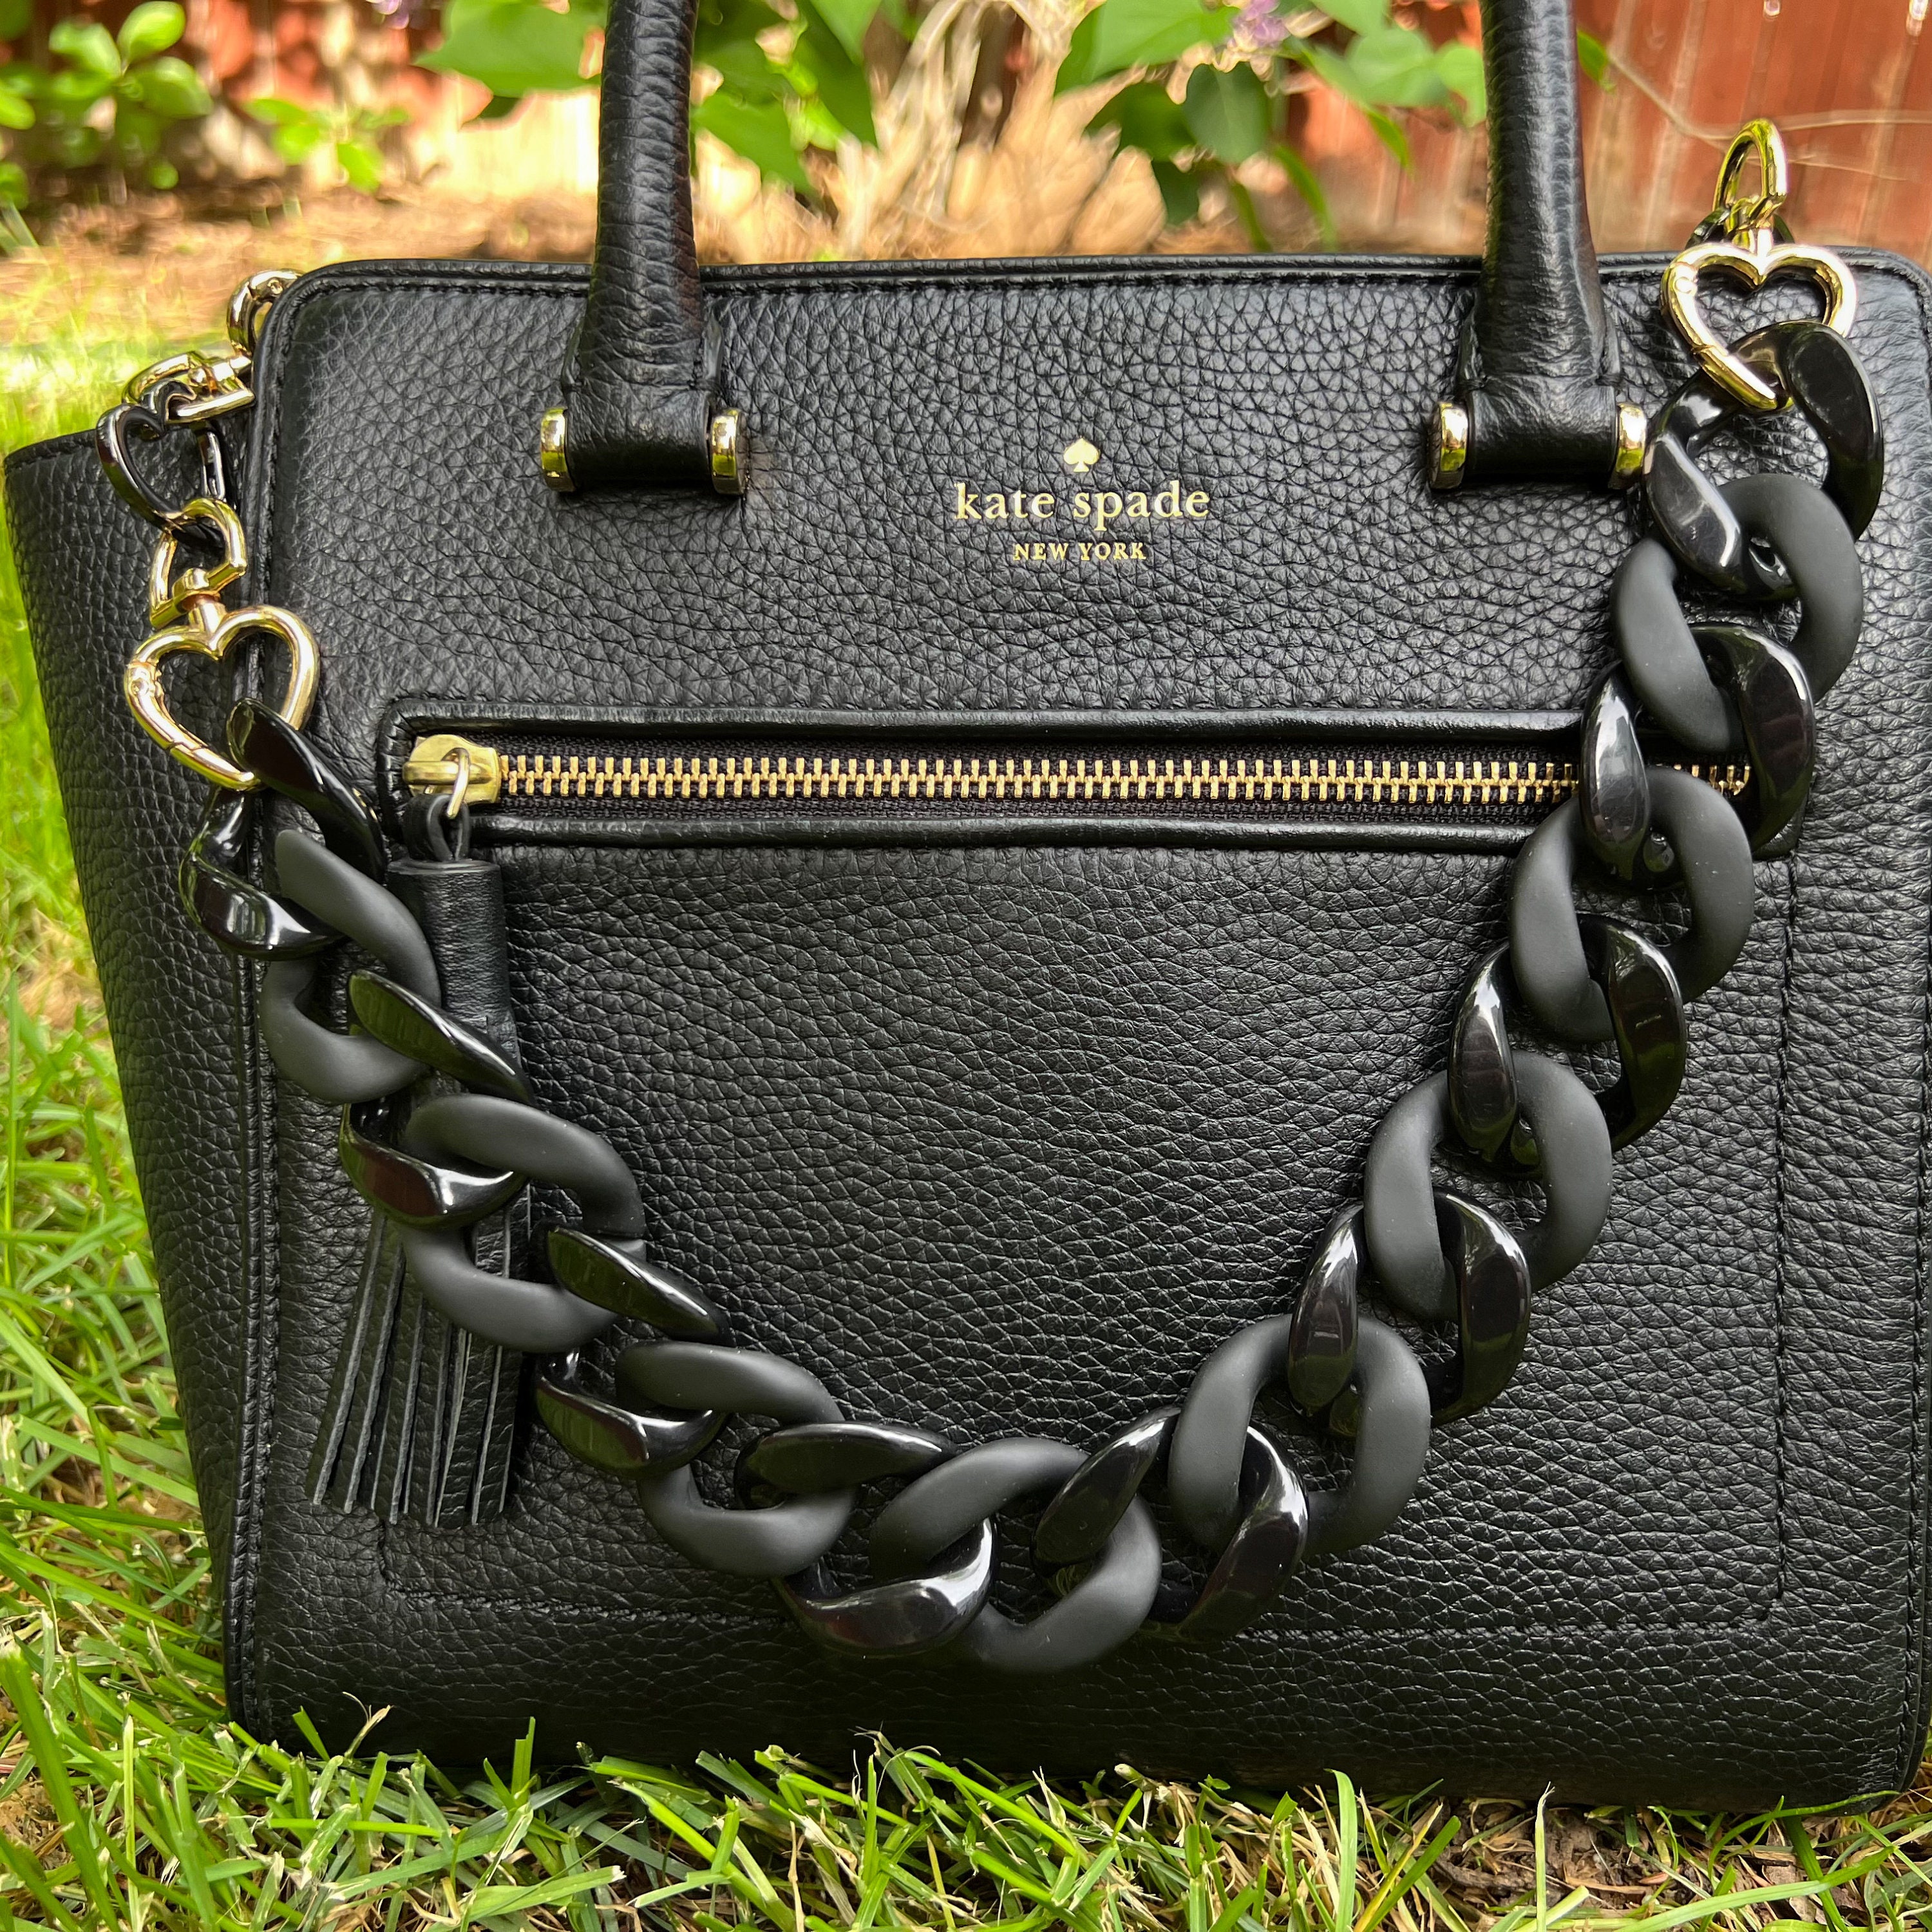 6mm High Quality Purse Chain Strap,metal Shoulder Handbag Strap,purse  Replacement Chains,bag Accessories, JD-1400 